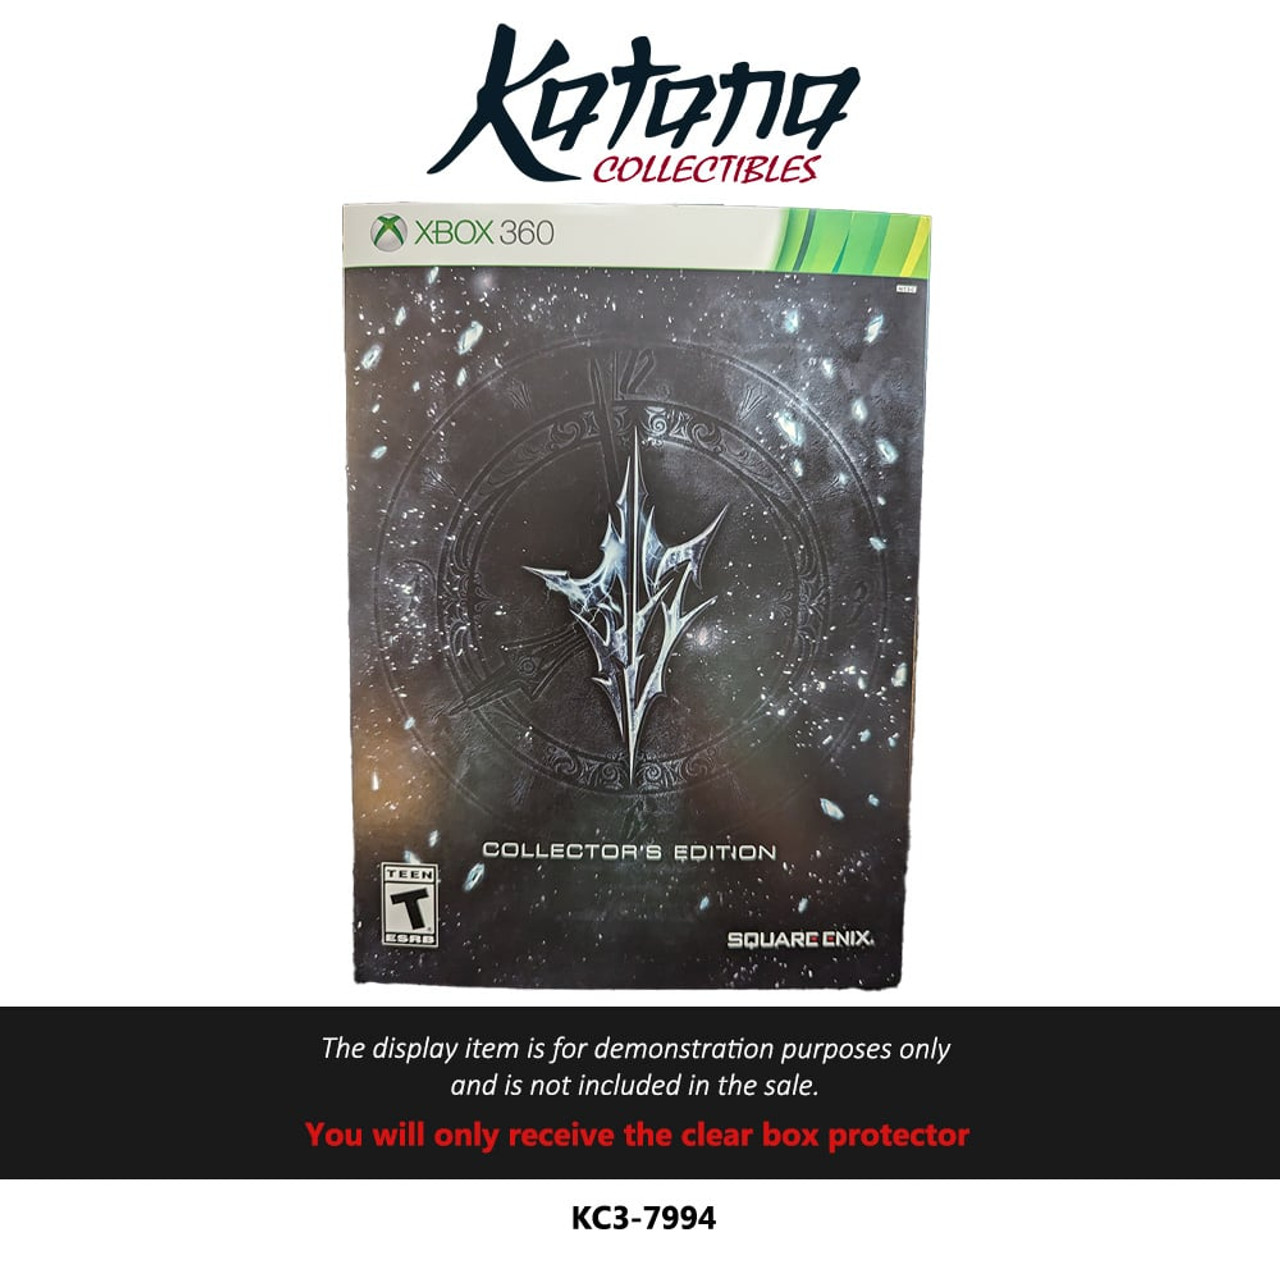 Katana Collectibles Protector For Lightning Returns: Final Fantasy XIII Collectors Edition